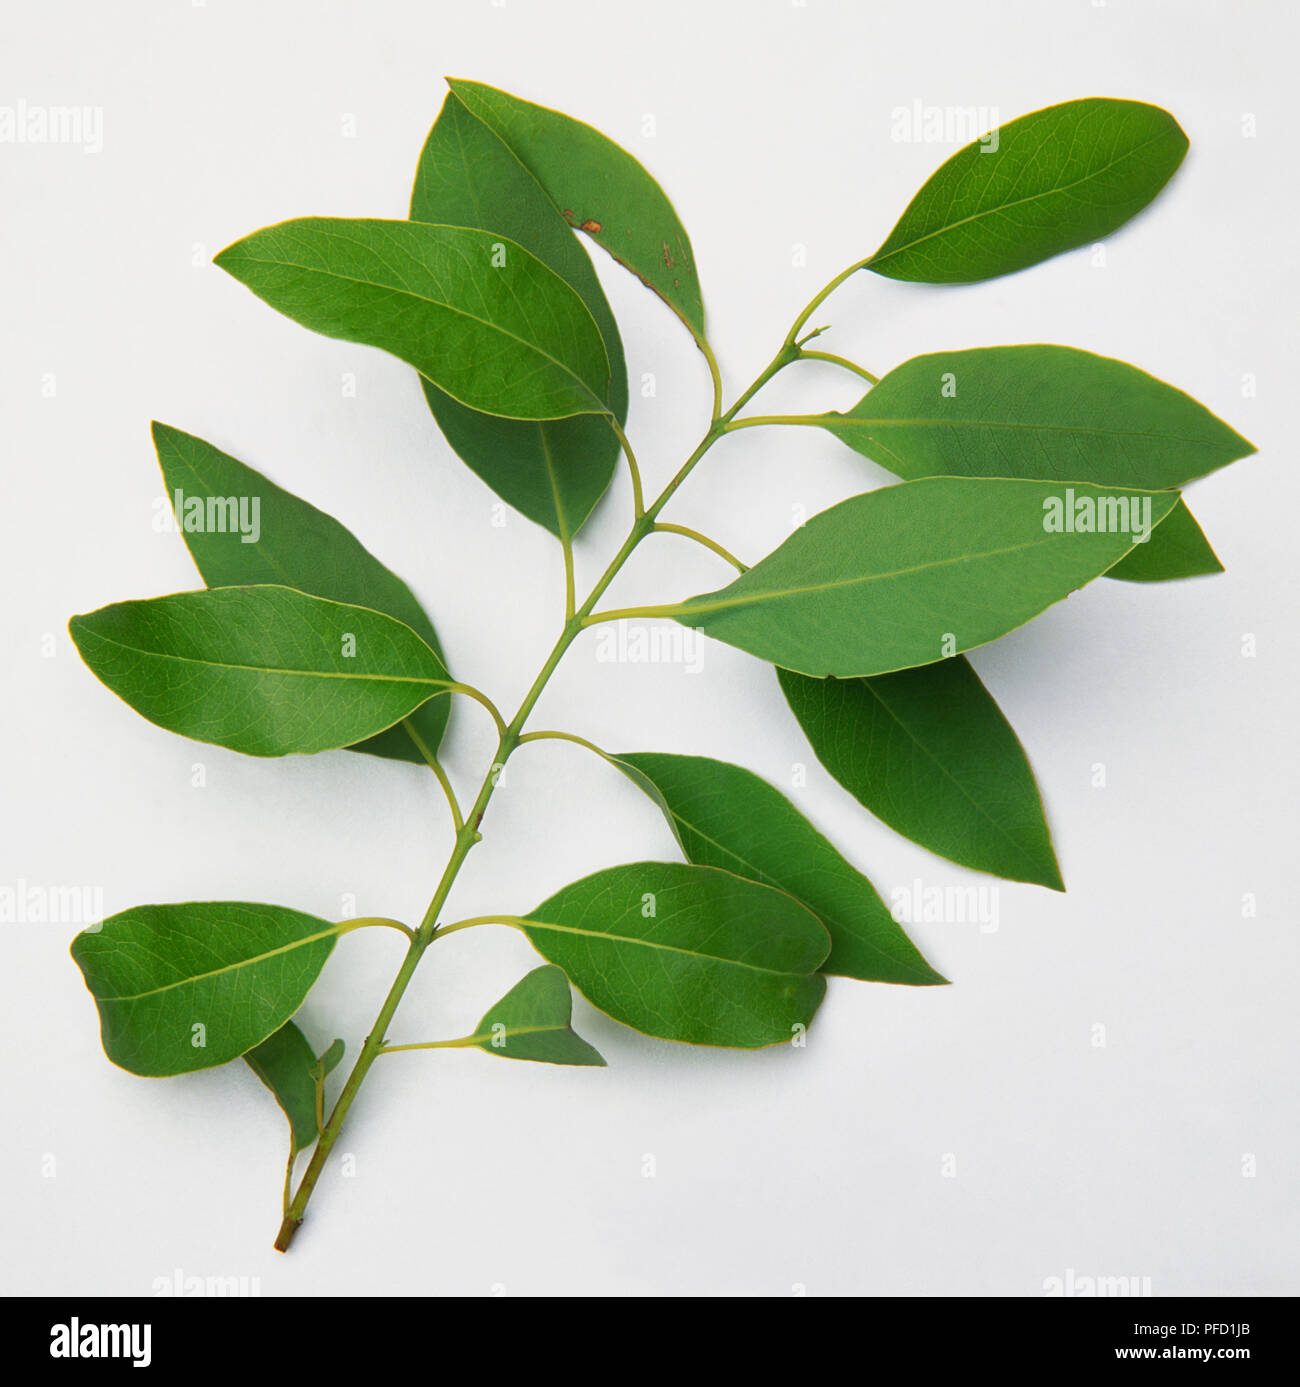 Santalum album, leaves from Indian Sandalwood tree. Stock Photo